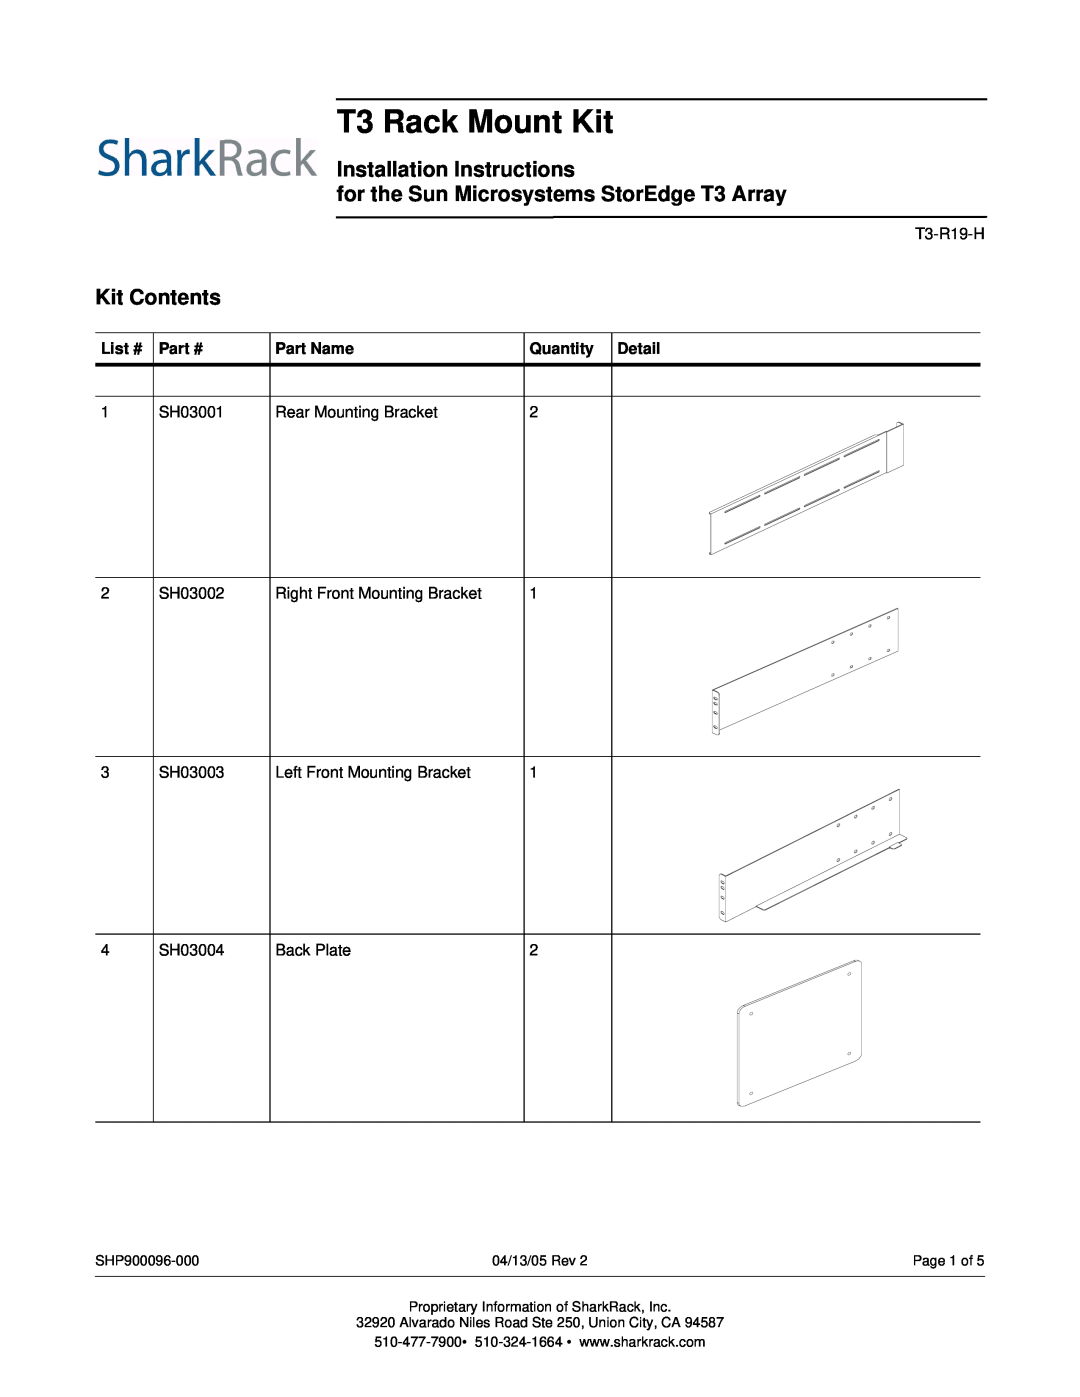 SharkRack T3-R19-H installation instructions T3 Rack Mount Kit, Kit Contents, Installation Instructions, List #, Part Name 